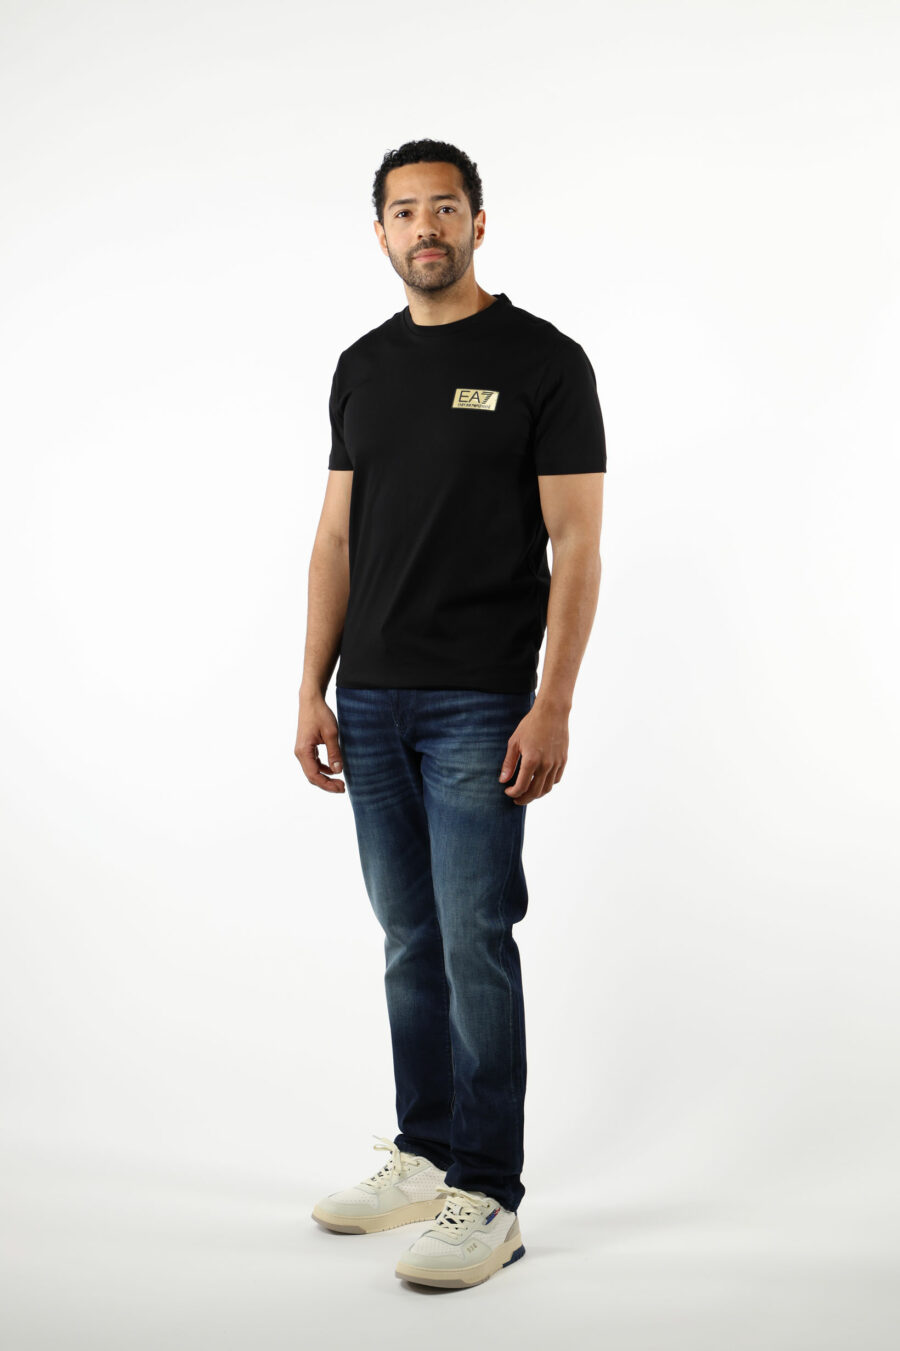 Camiseta negra con minilogo "lux identity" negro en placa dorada - 110812